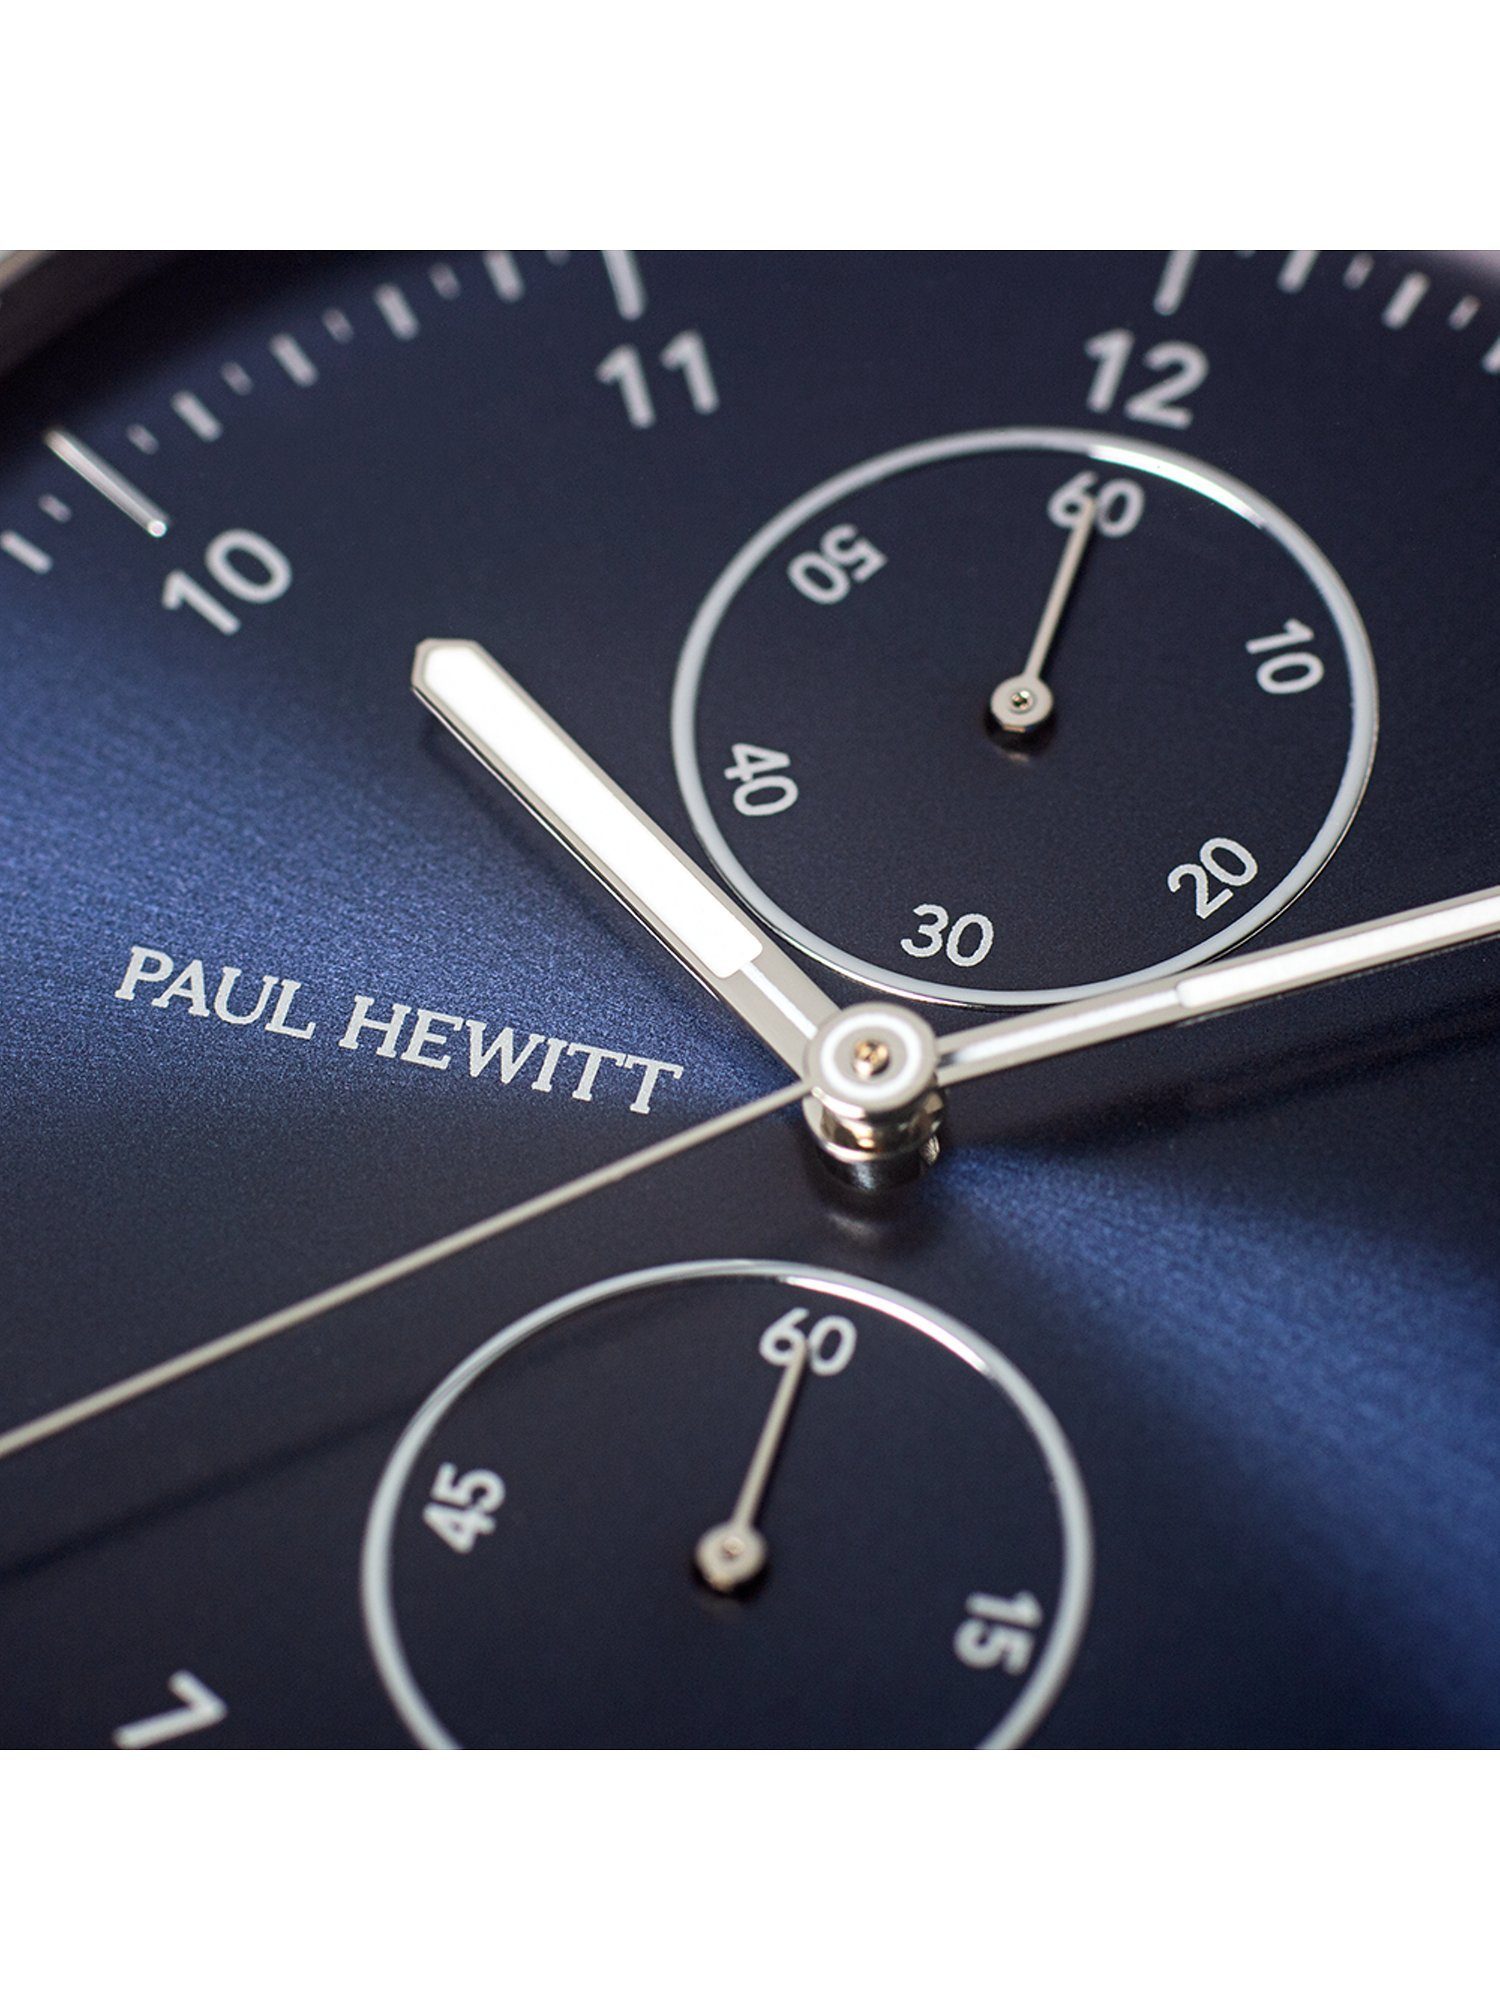 Herren-Uhren Hewitt Quarz, silber, Paul Analog HEWITT Klassikuhr PAUL Quarzuhr blau